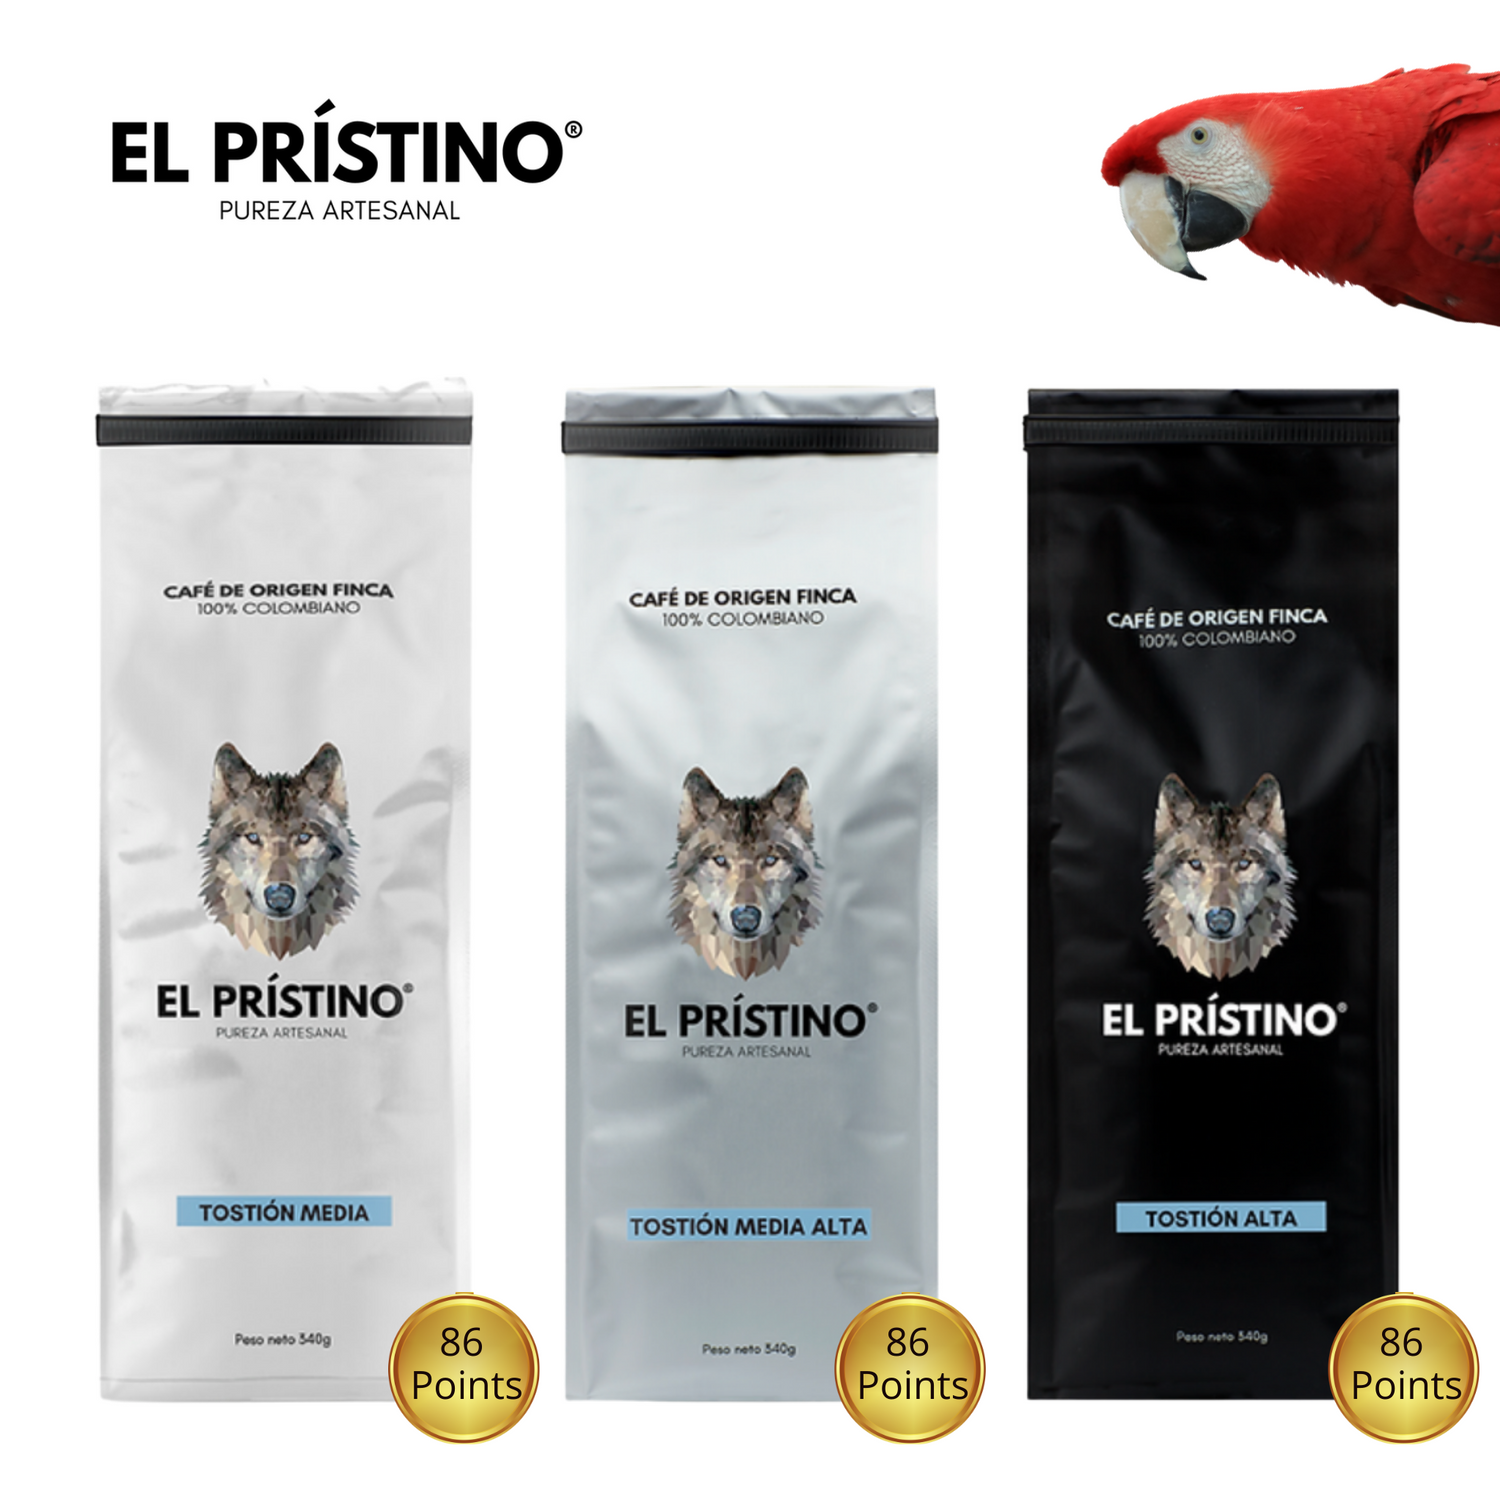 El Pristino Specialty Colombian Coffee. Medium to dak roast. Buy it here at Coffee Bean and Birds